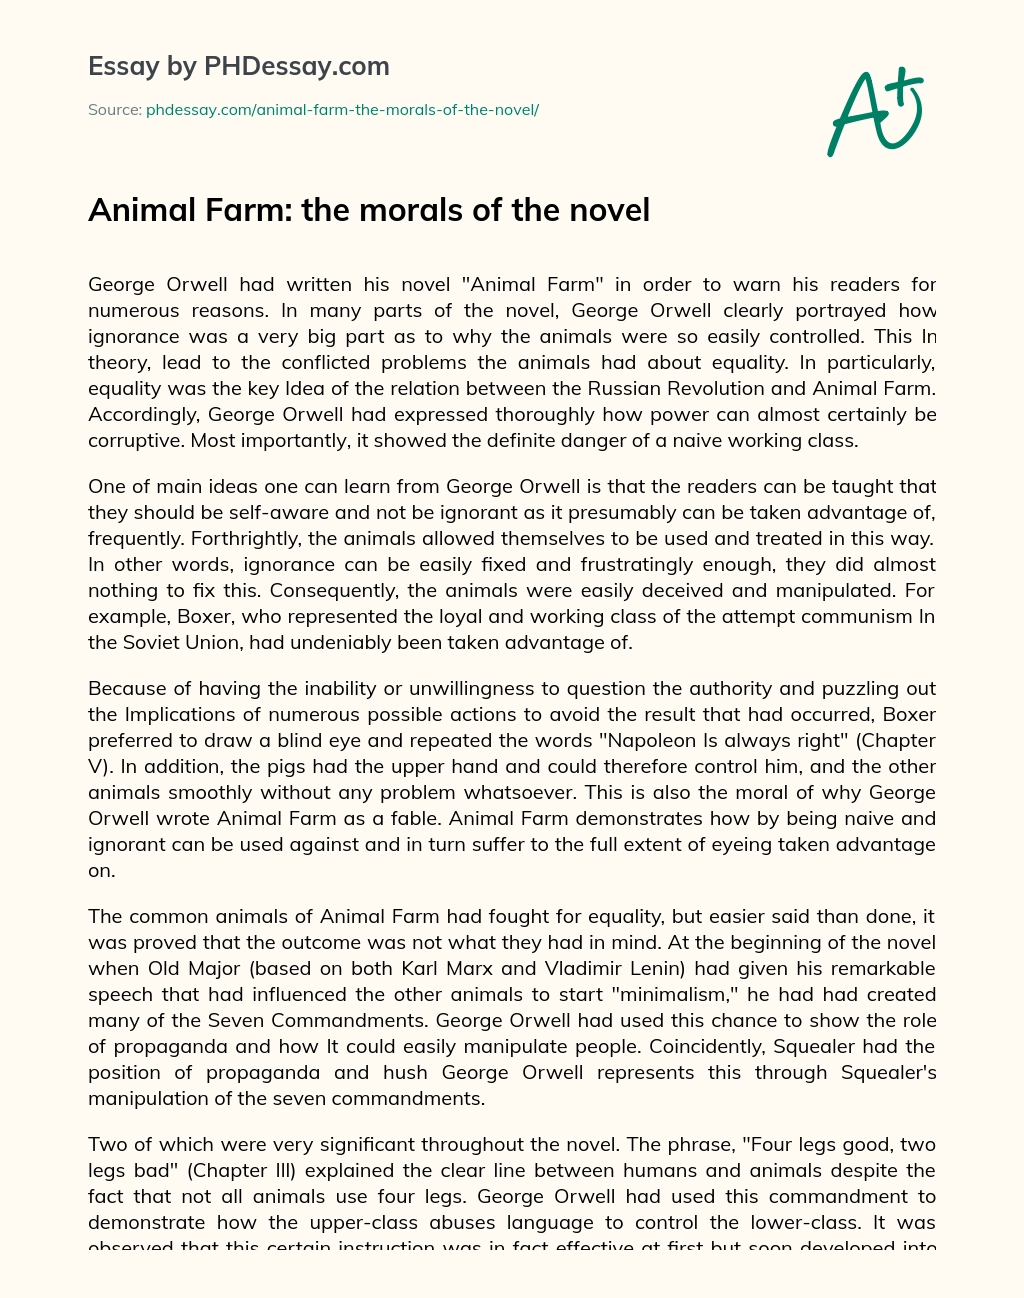 Animal Farm: the morals of the novel essay